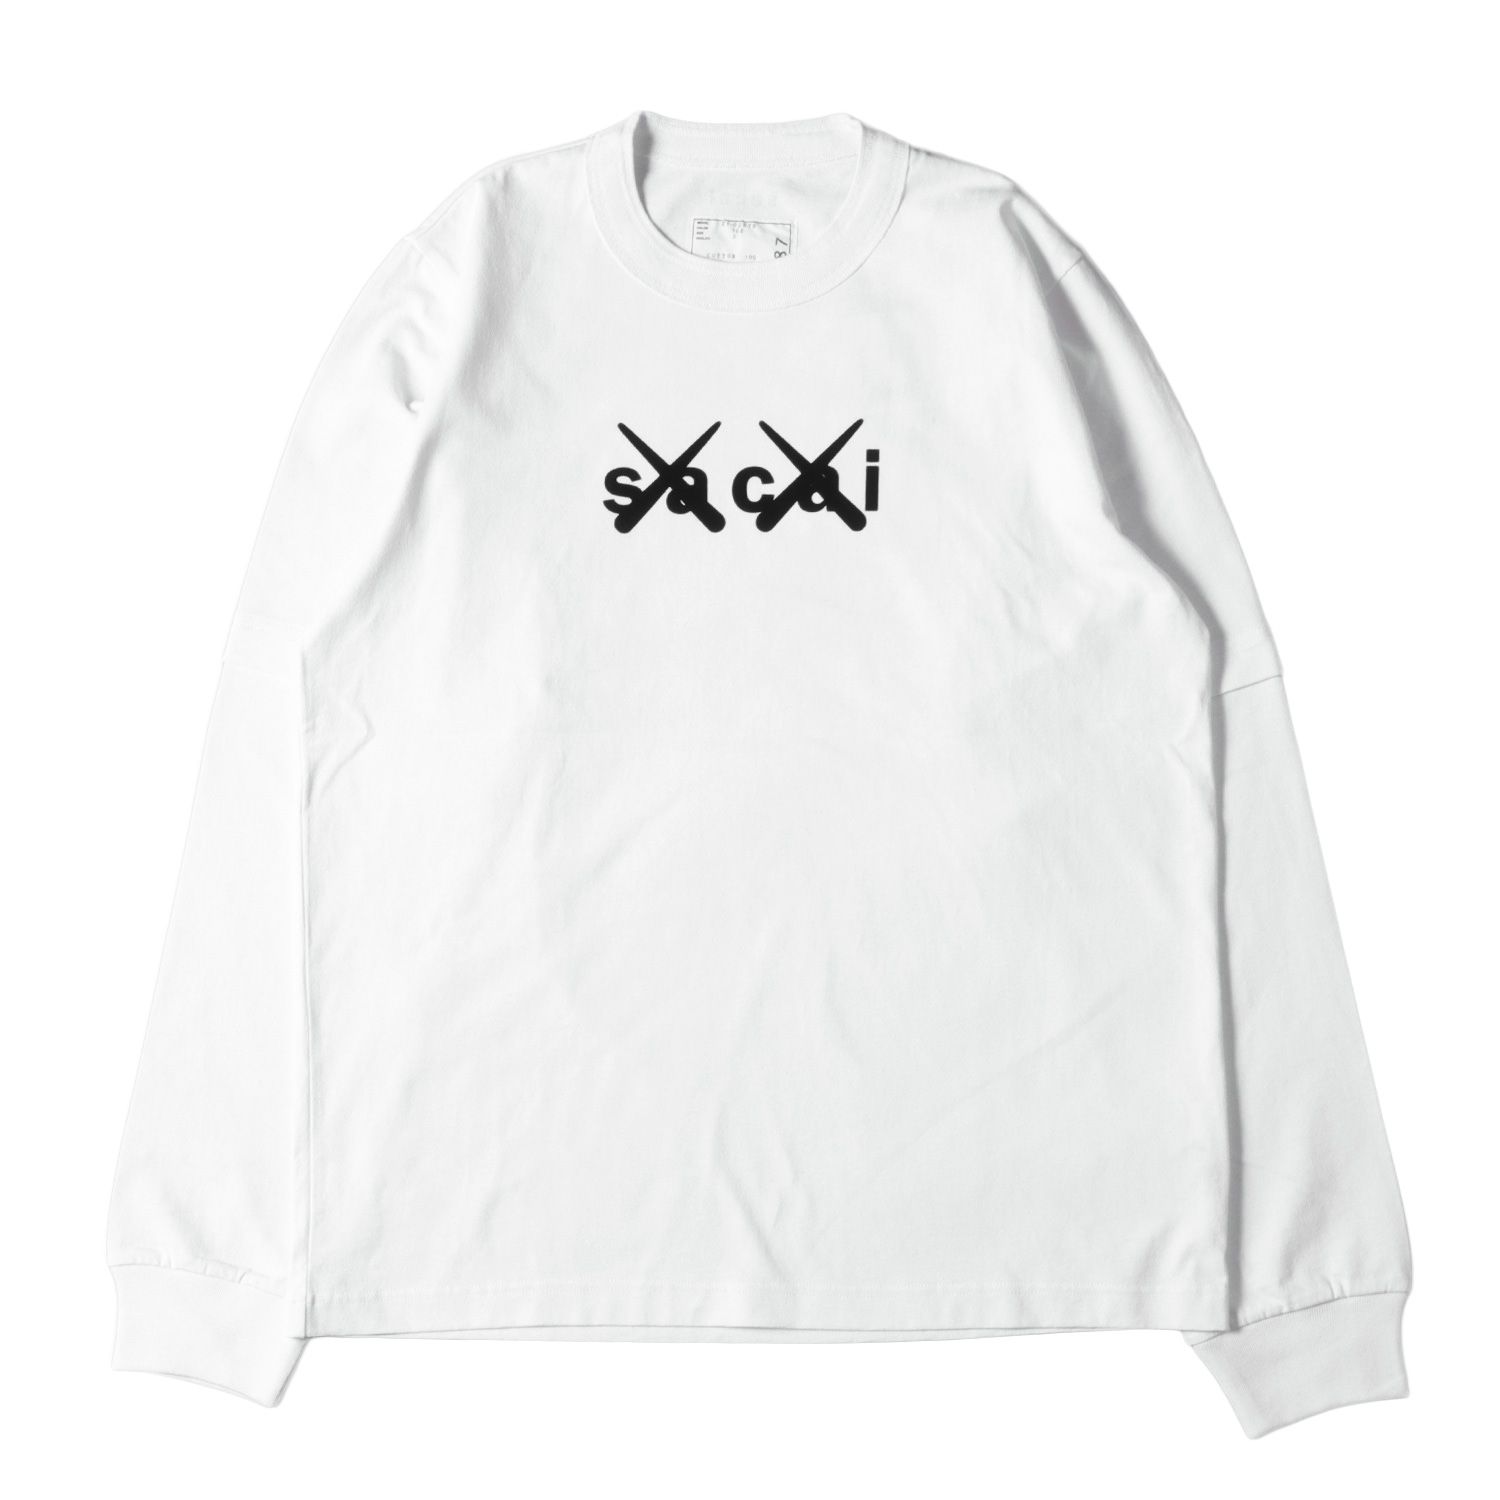 sacai x KAWS Embroidery T-Shirt 白 サイズ3WHITEサイズ